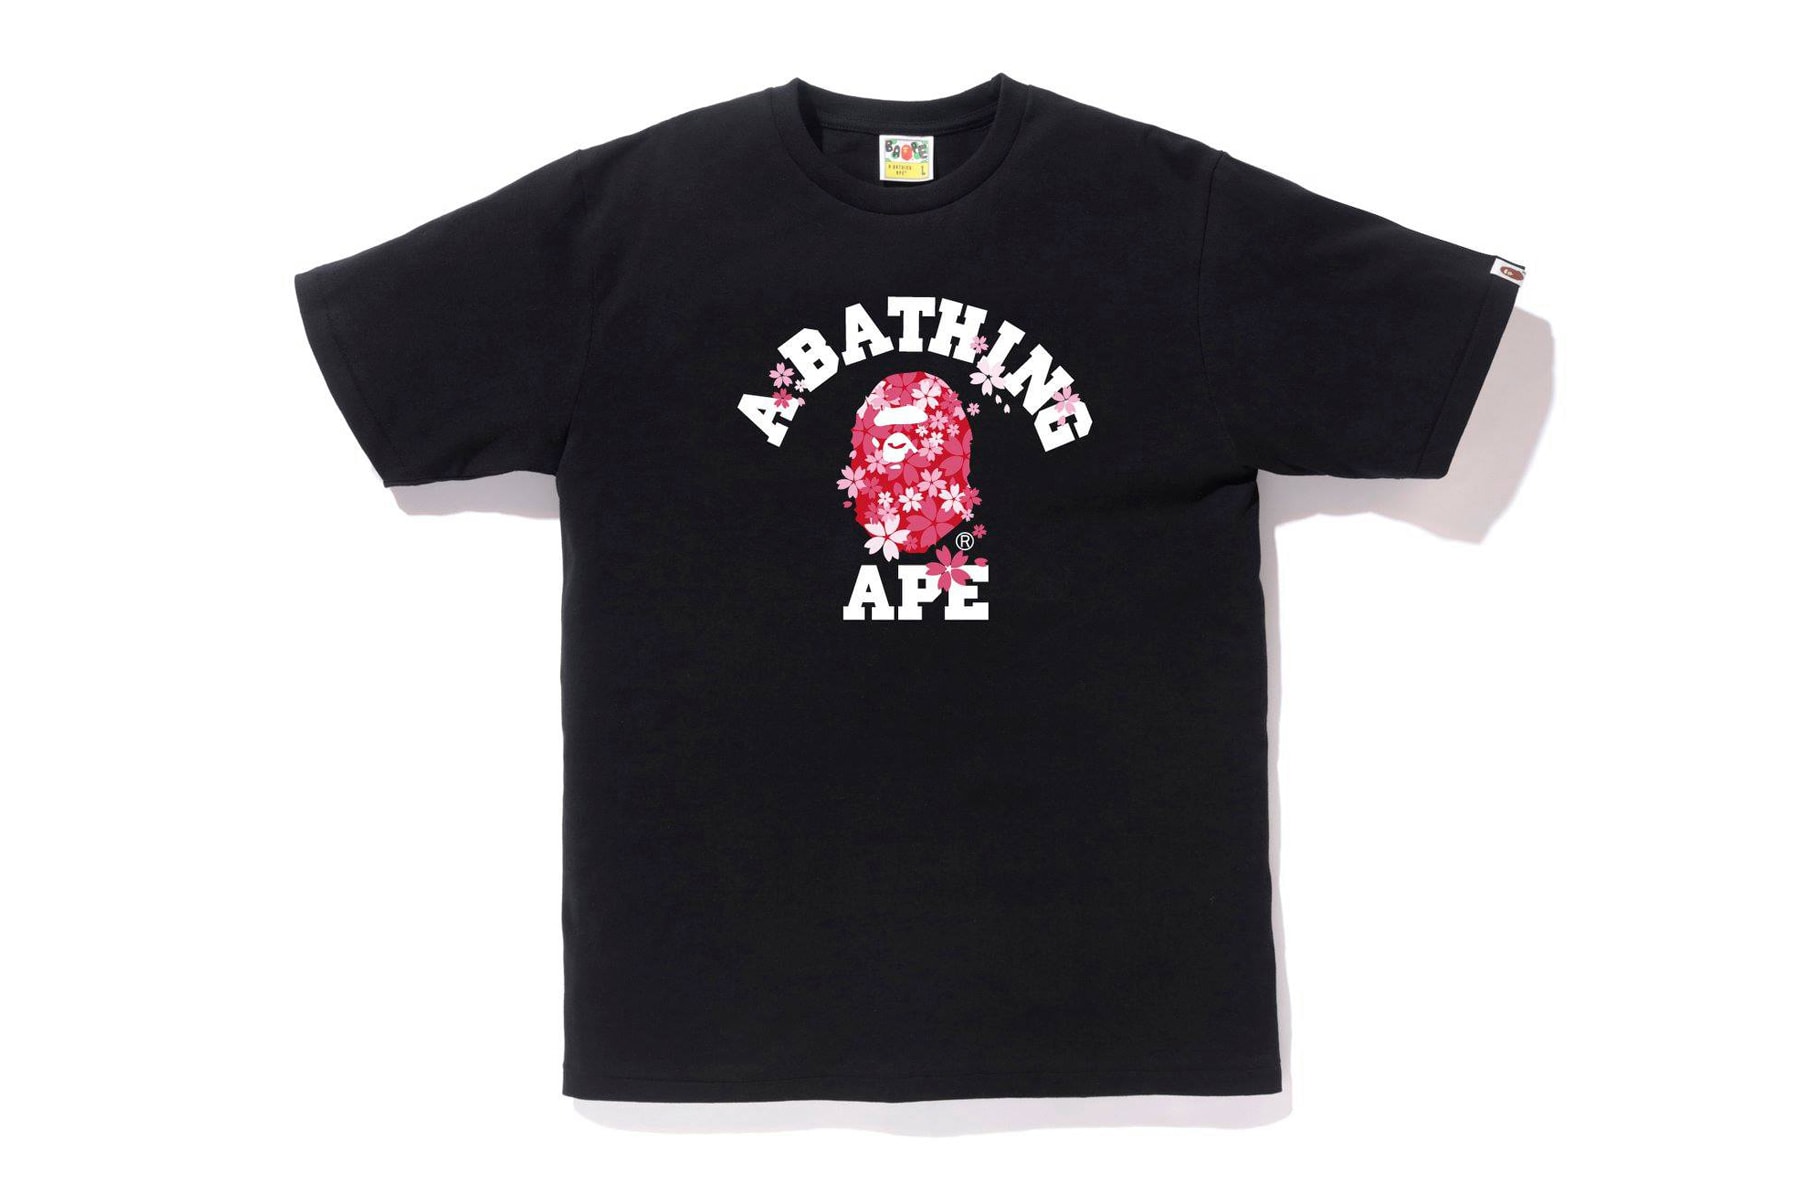 BAPE graphic t shirts tee spring summer 2018 bathing ape drop release collection japan march 31 2018 sakura branding logo a bathing ape